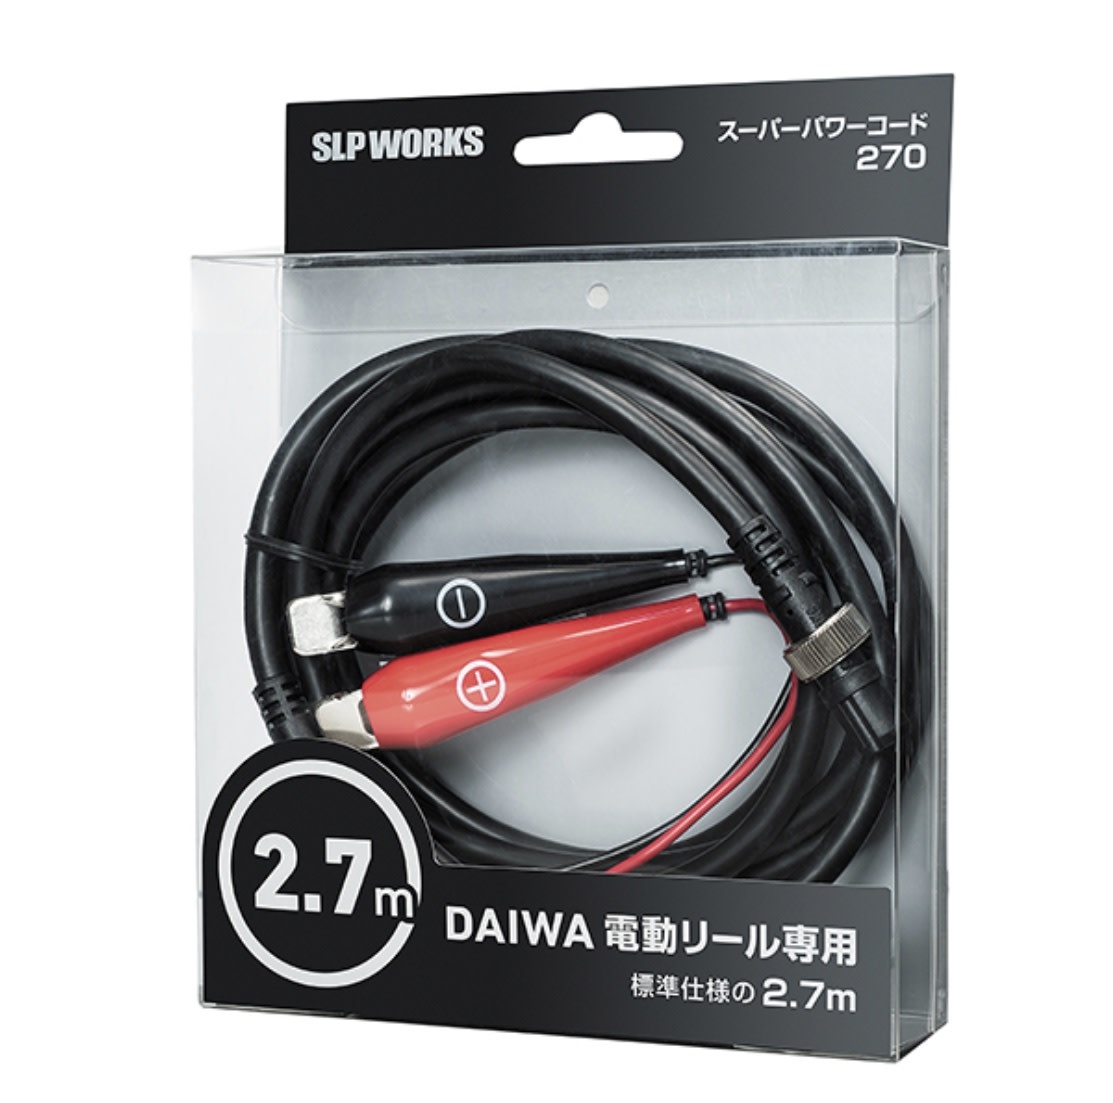 Daiwa DJBSW-1 Power Chord Seaborg 800 - Angler's Choice Tackle